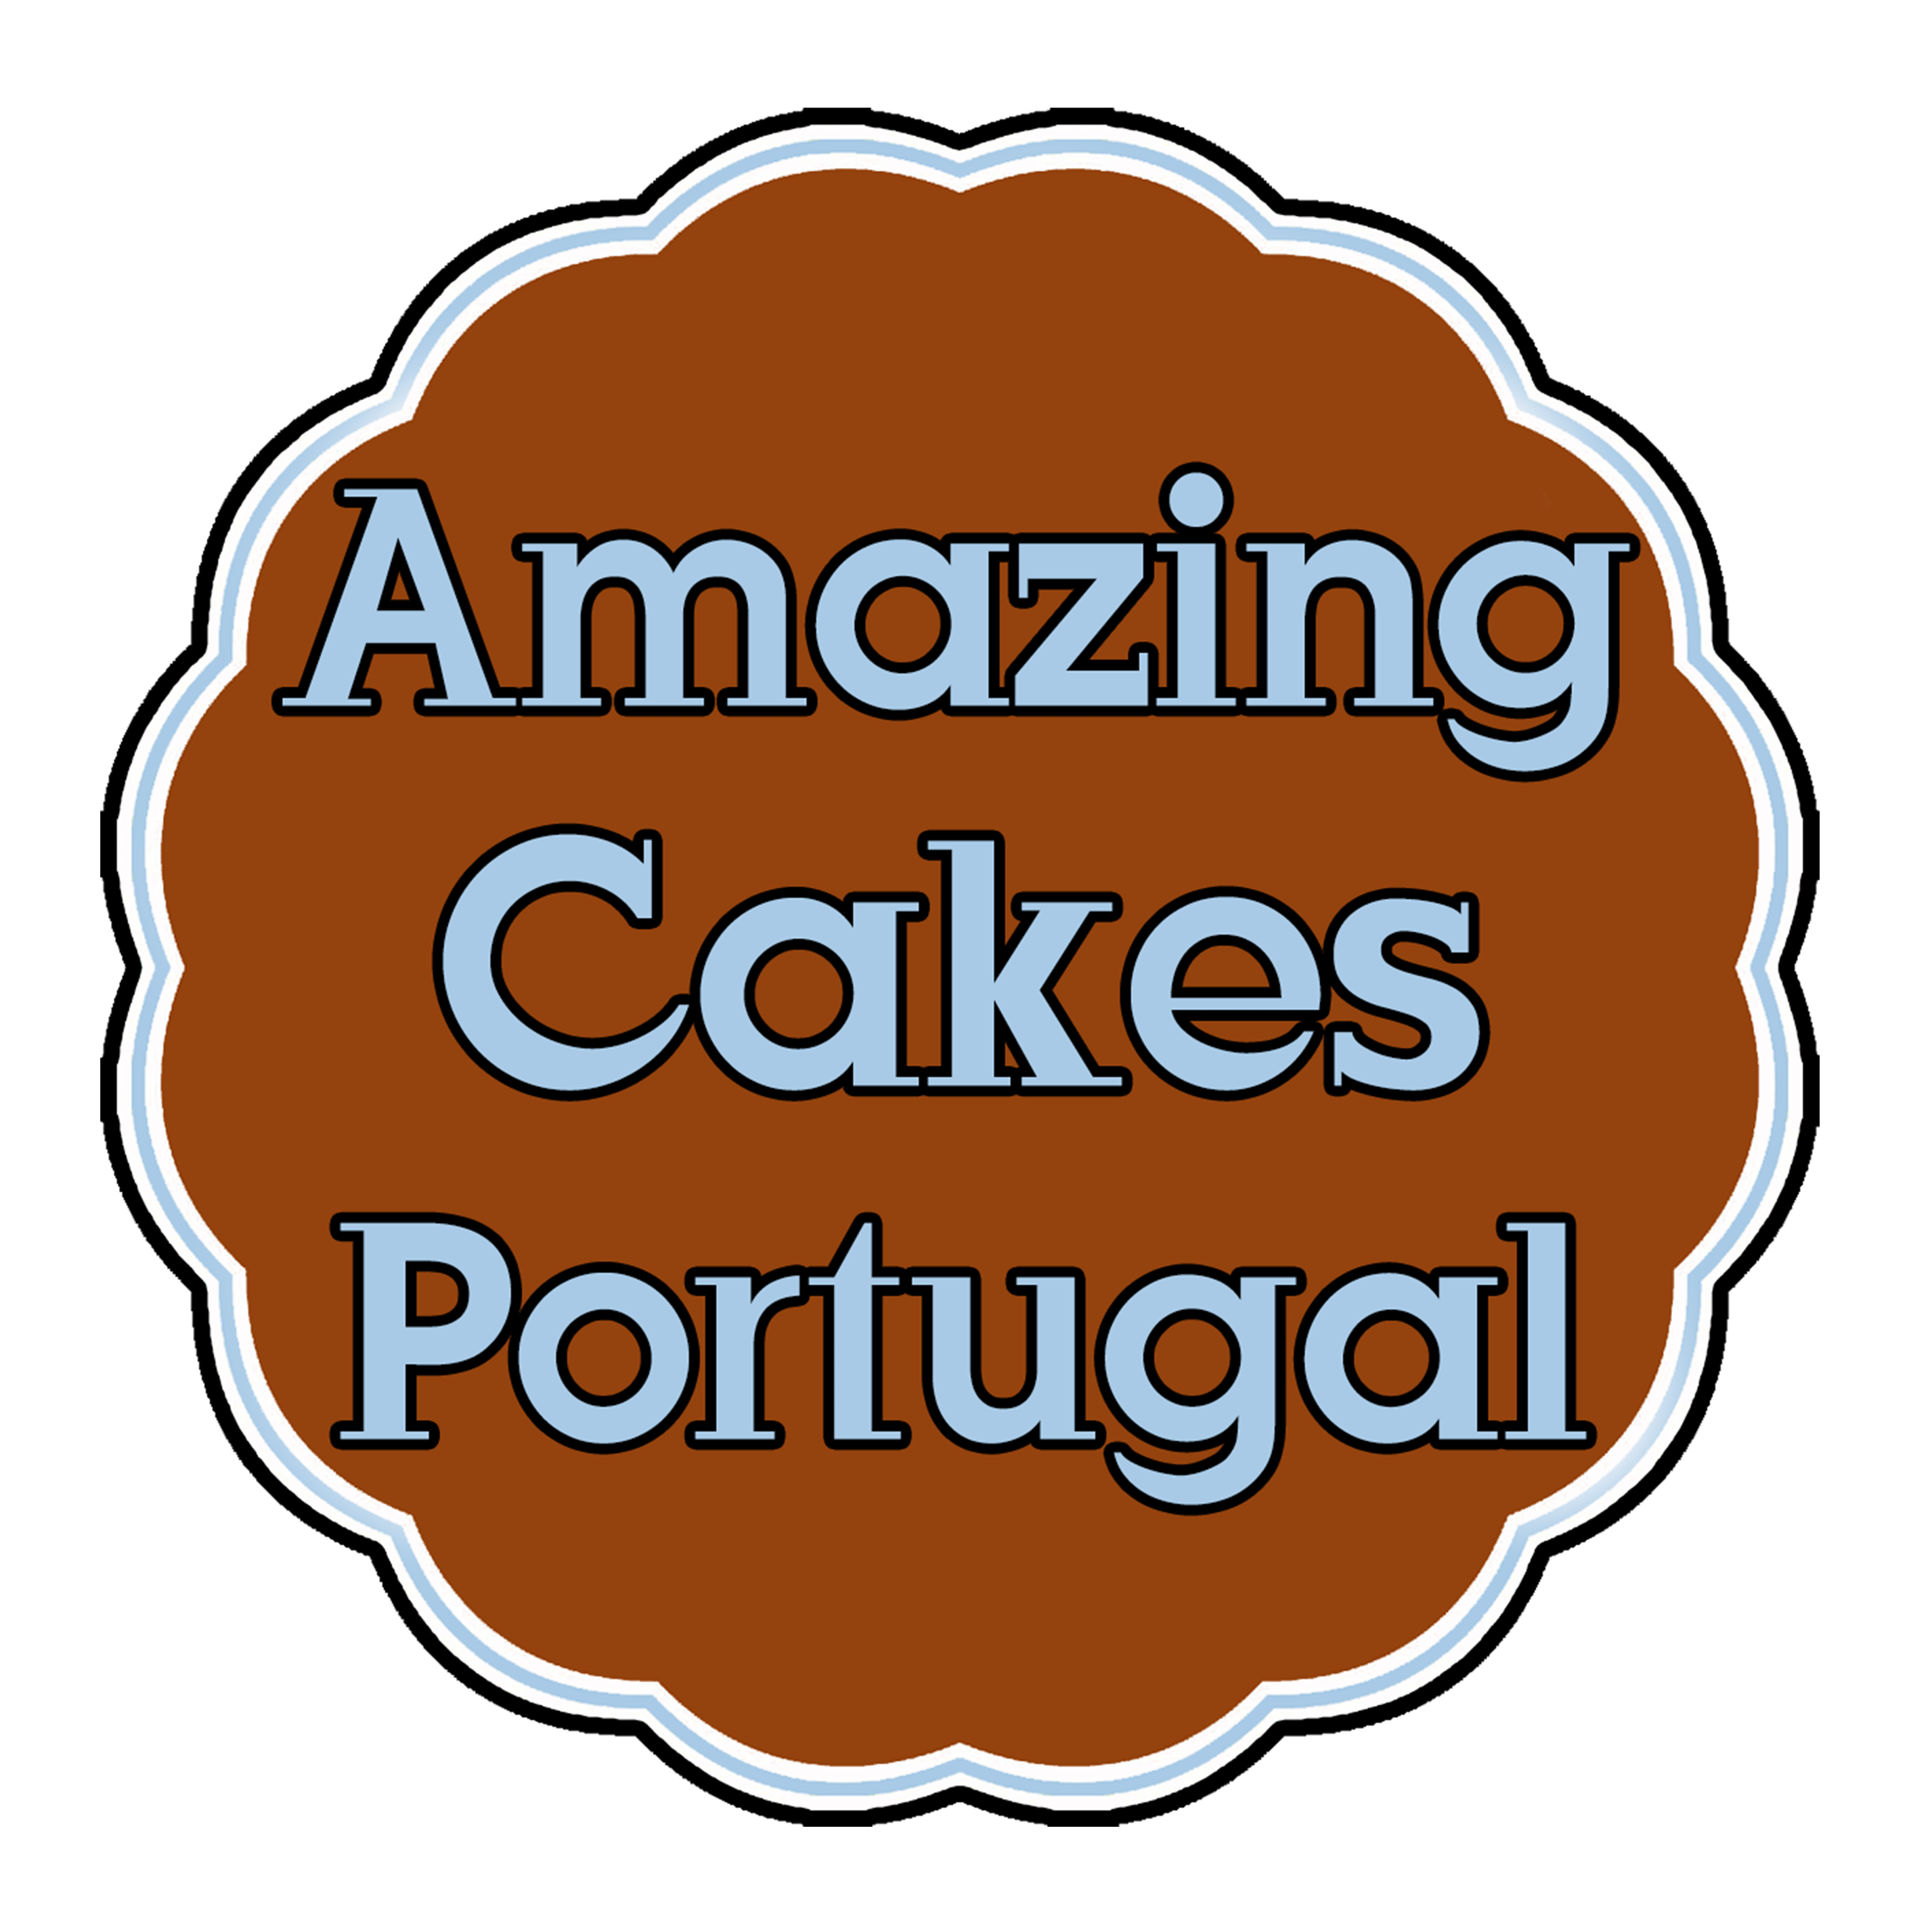 Amazing Cakes Portugal